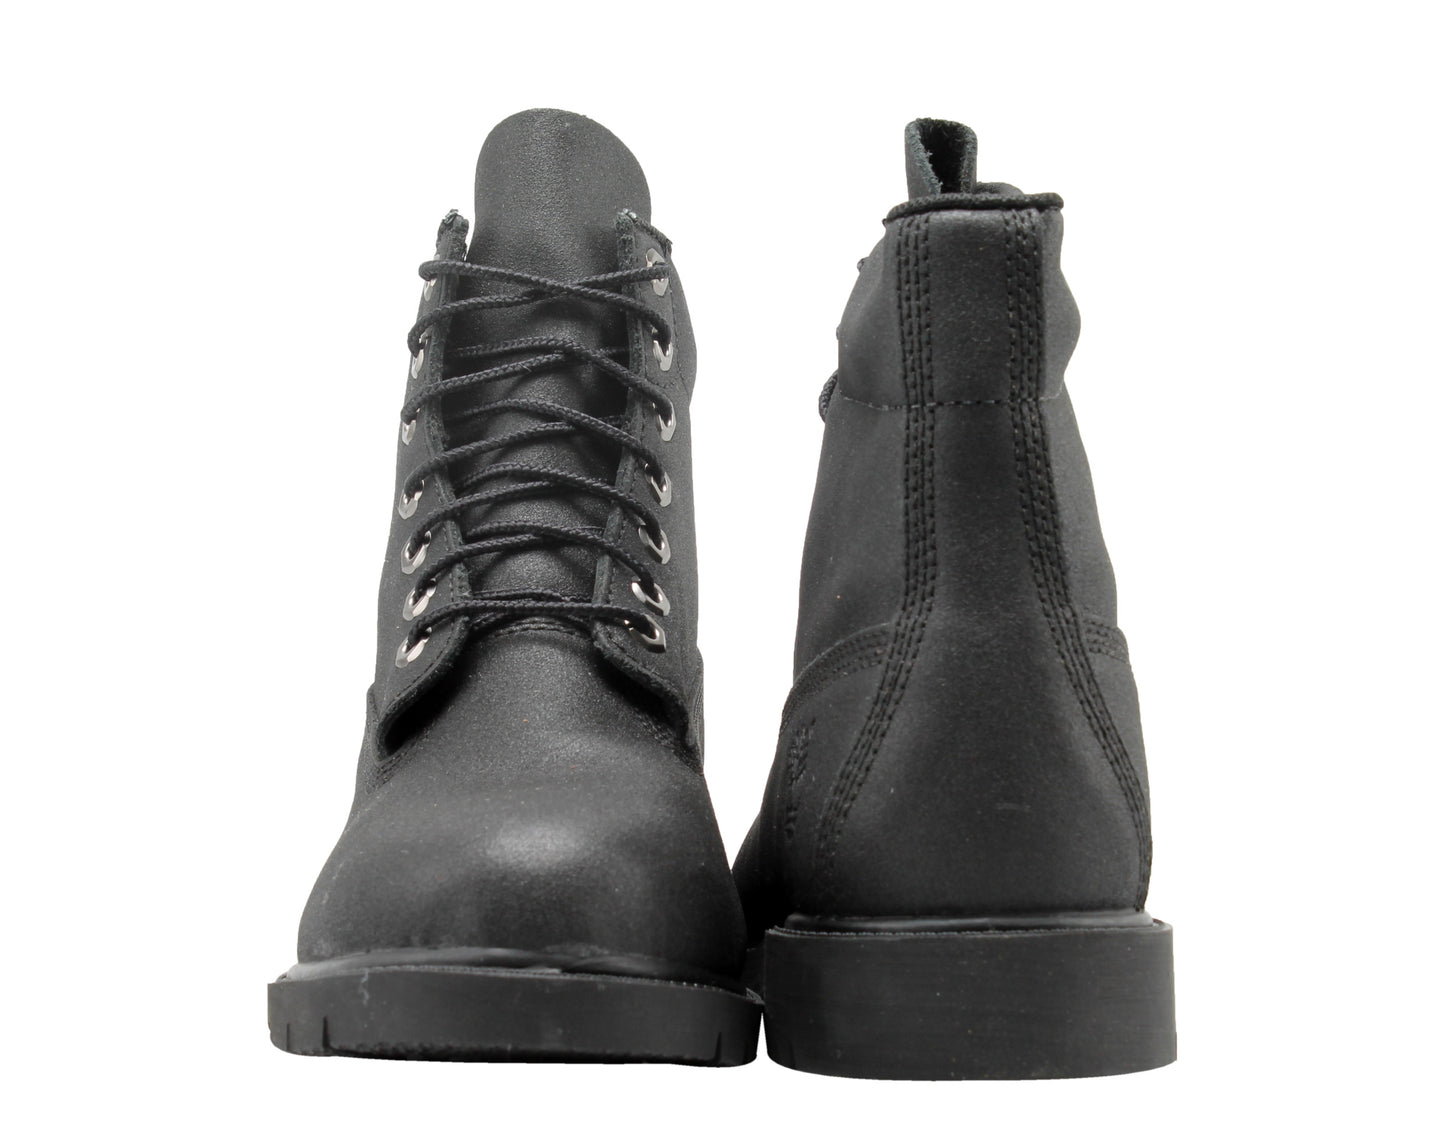 Timberland 6-Inch Basic Waterproof Black Tech Tuff Men's Boots A1114